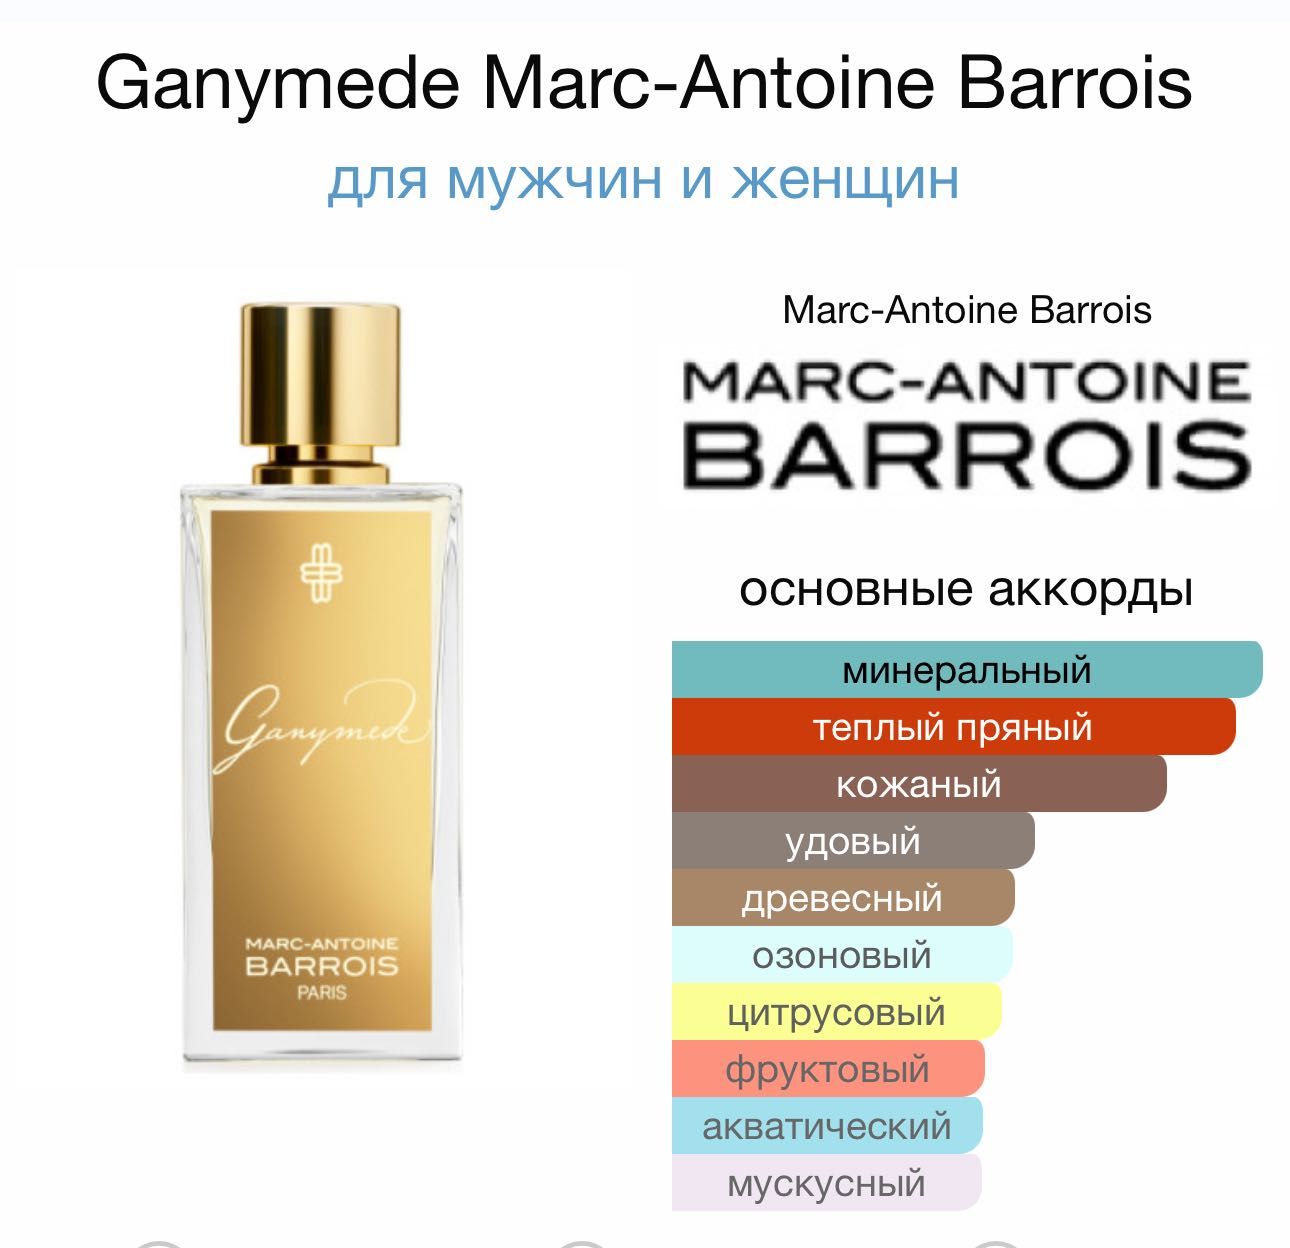 Ganymede Marc-Antoine Barrois